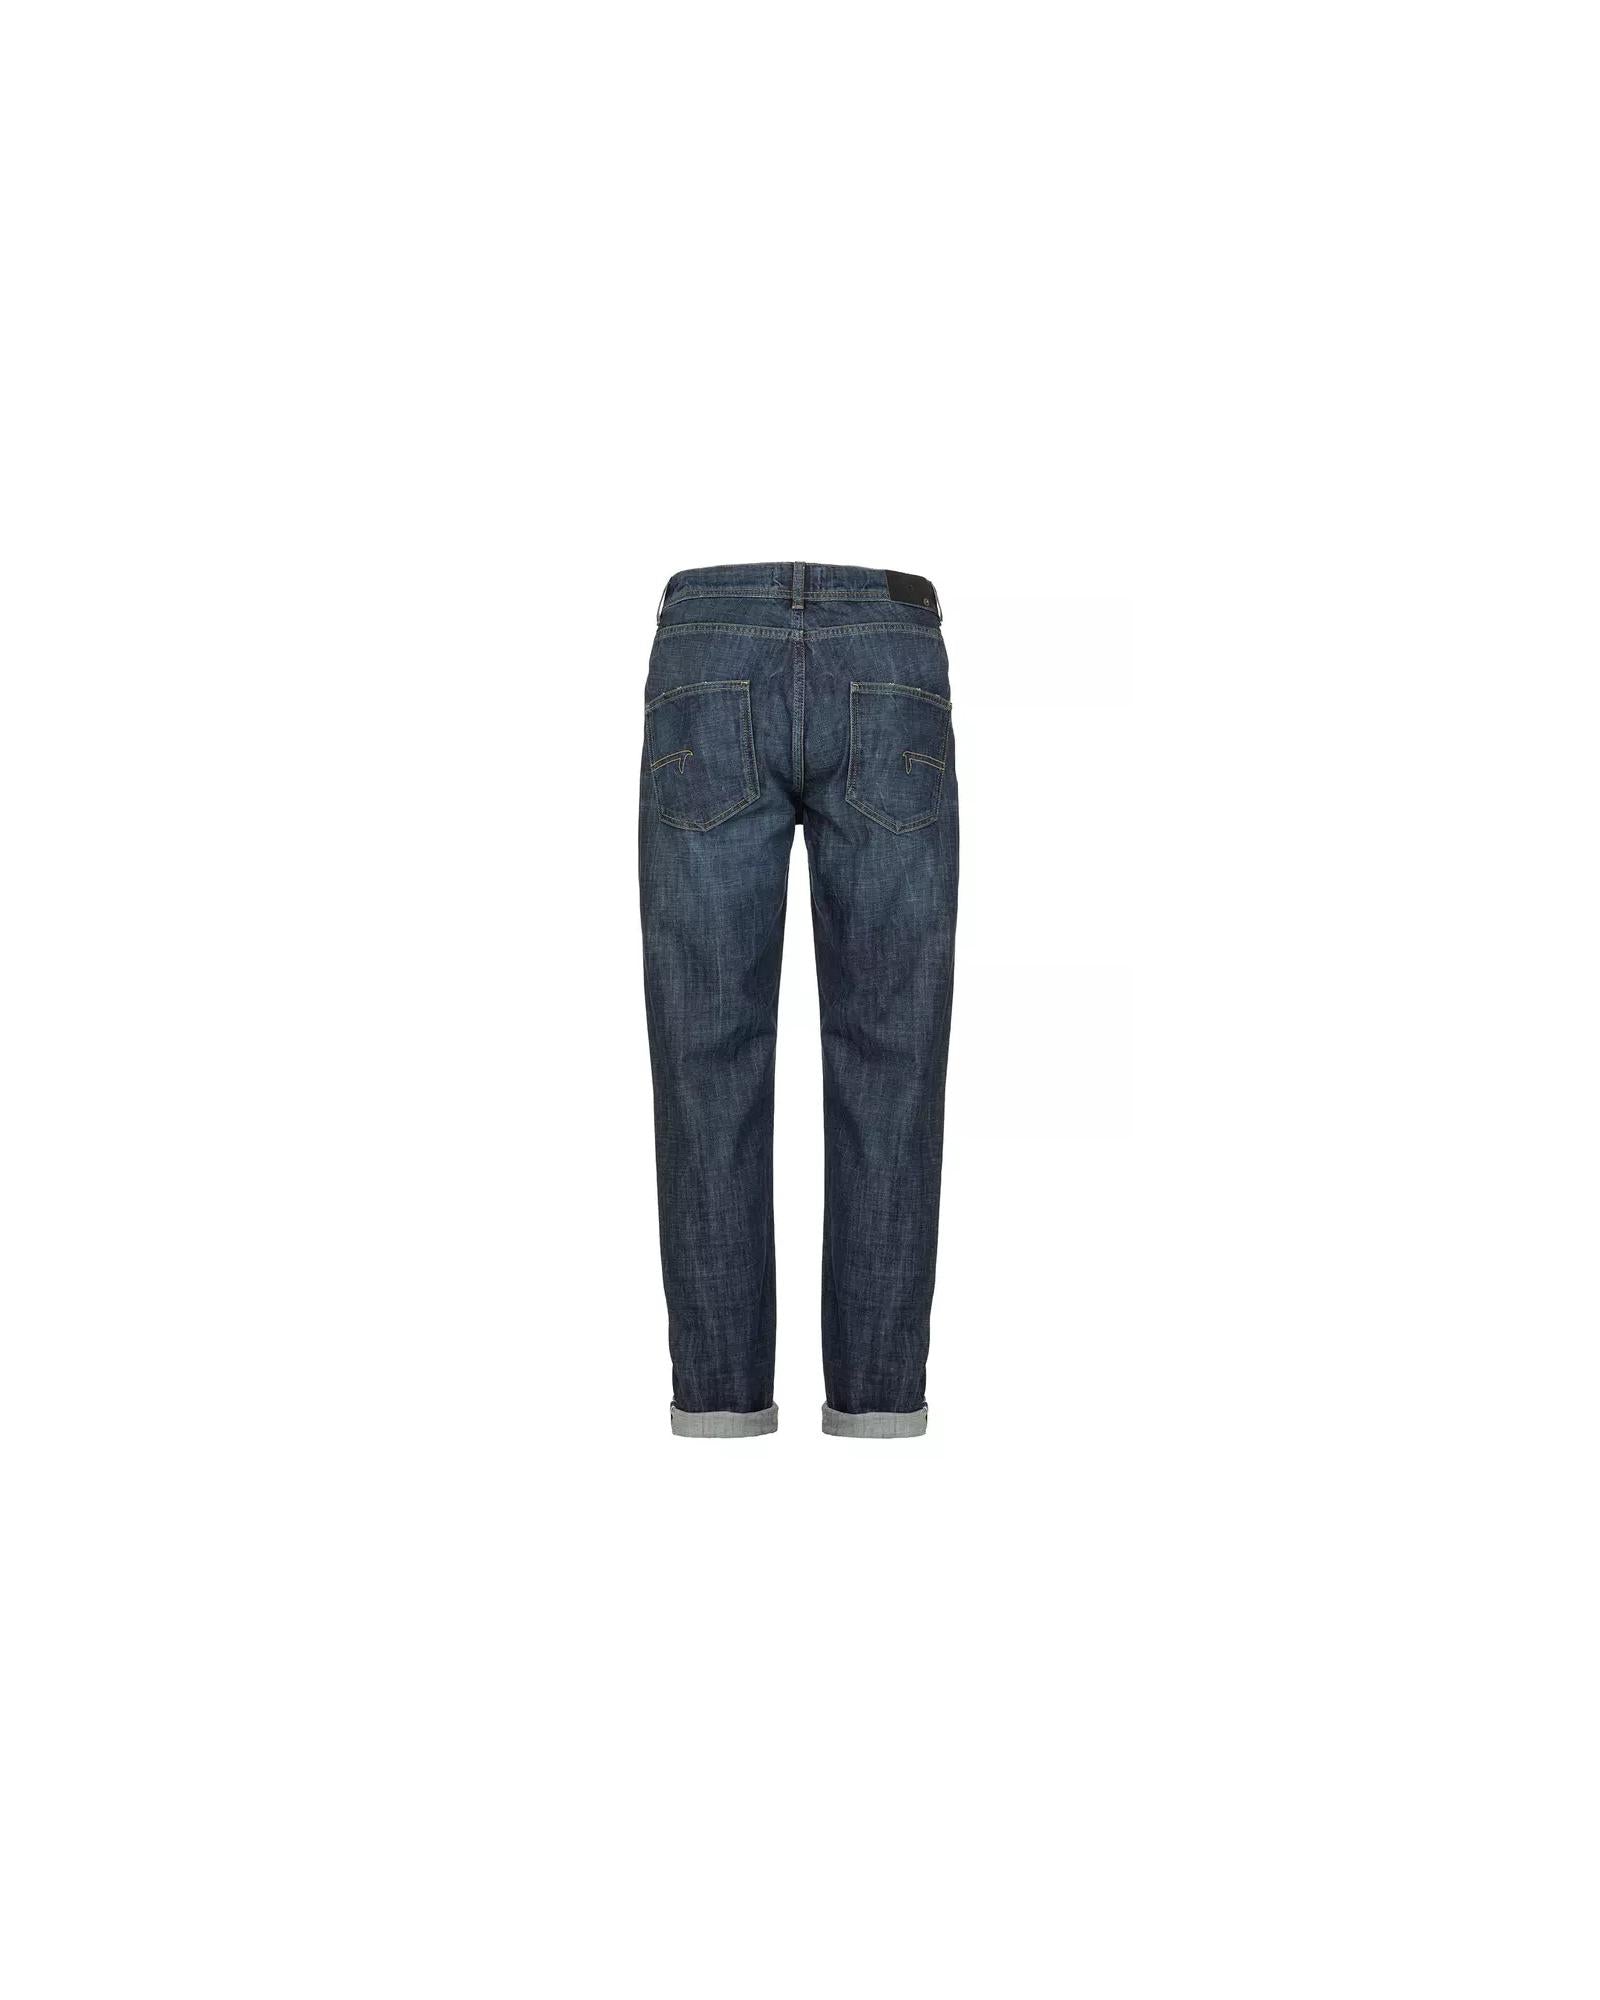 Five-Pocket Cotton Jeans with Zipper and Button Closure W31 US Men